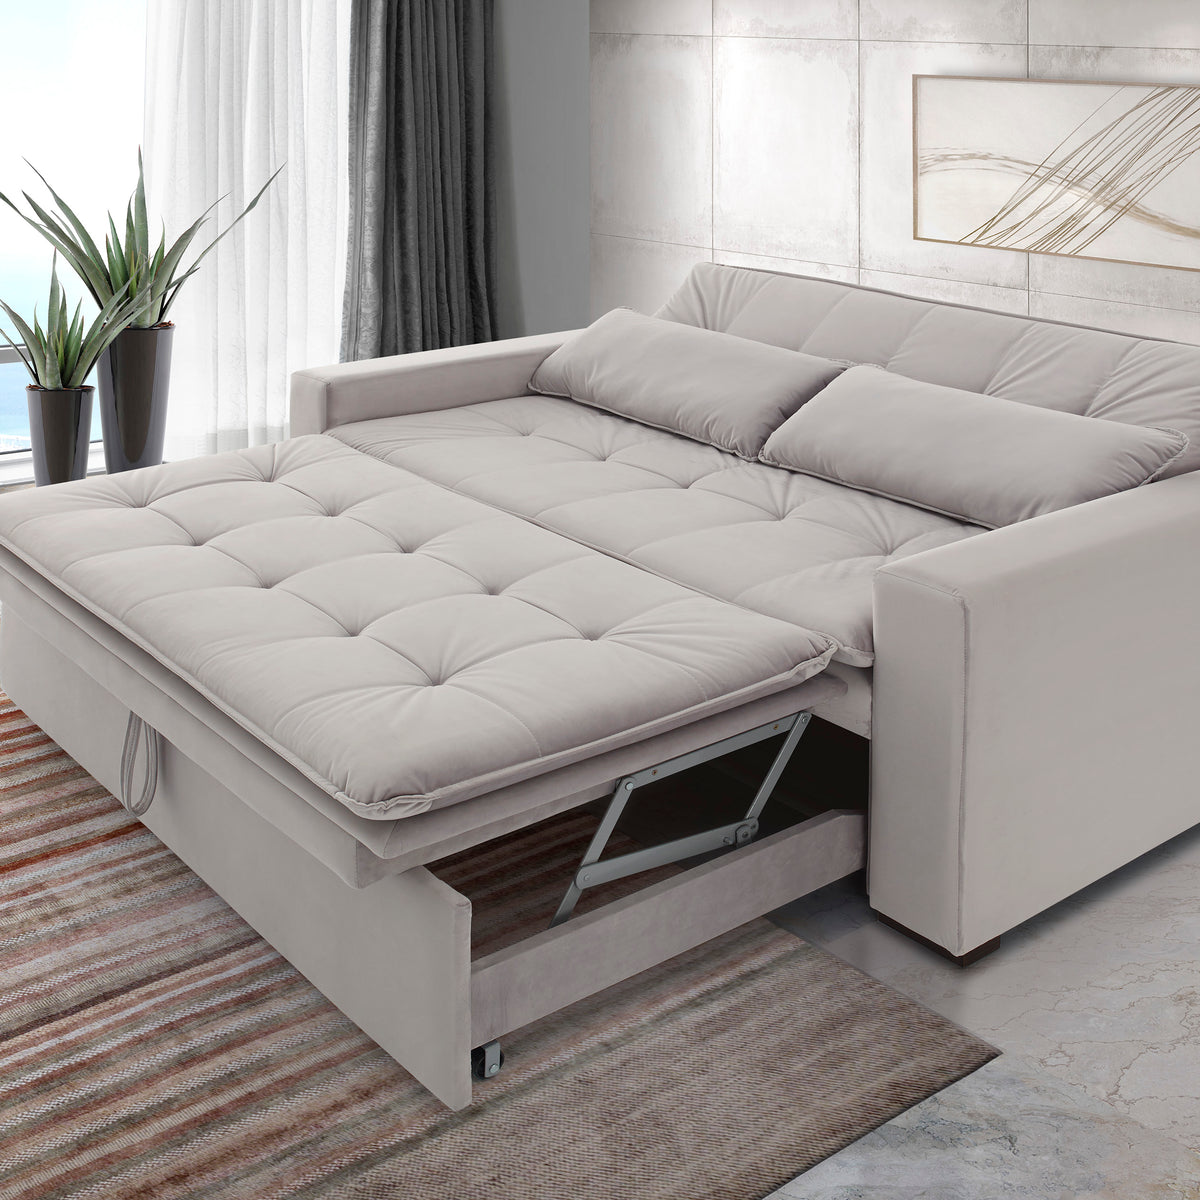 Re Sofa - Decora US Beds